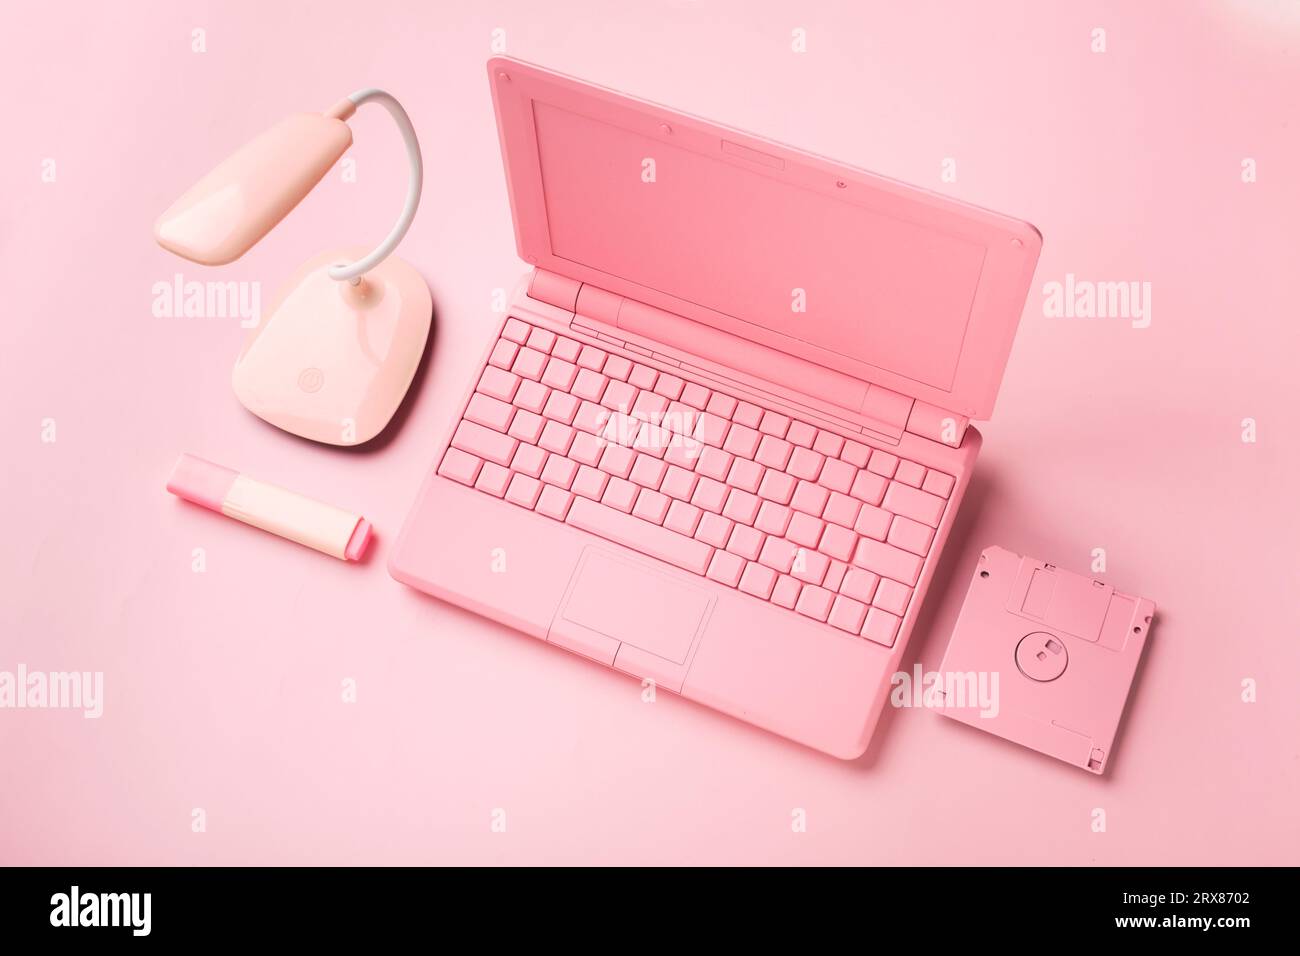 Farbiger pinColored Pink Laptop mit heller Diskette, Modernität Concept.k Laptop mit heller Diskette, Modernität Concept. Hochwertige Fotos Stockfoto